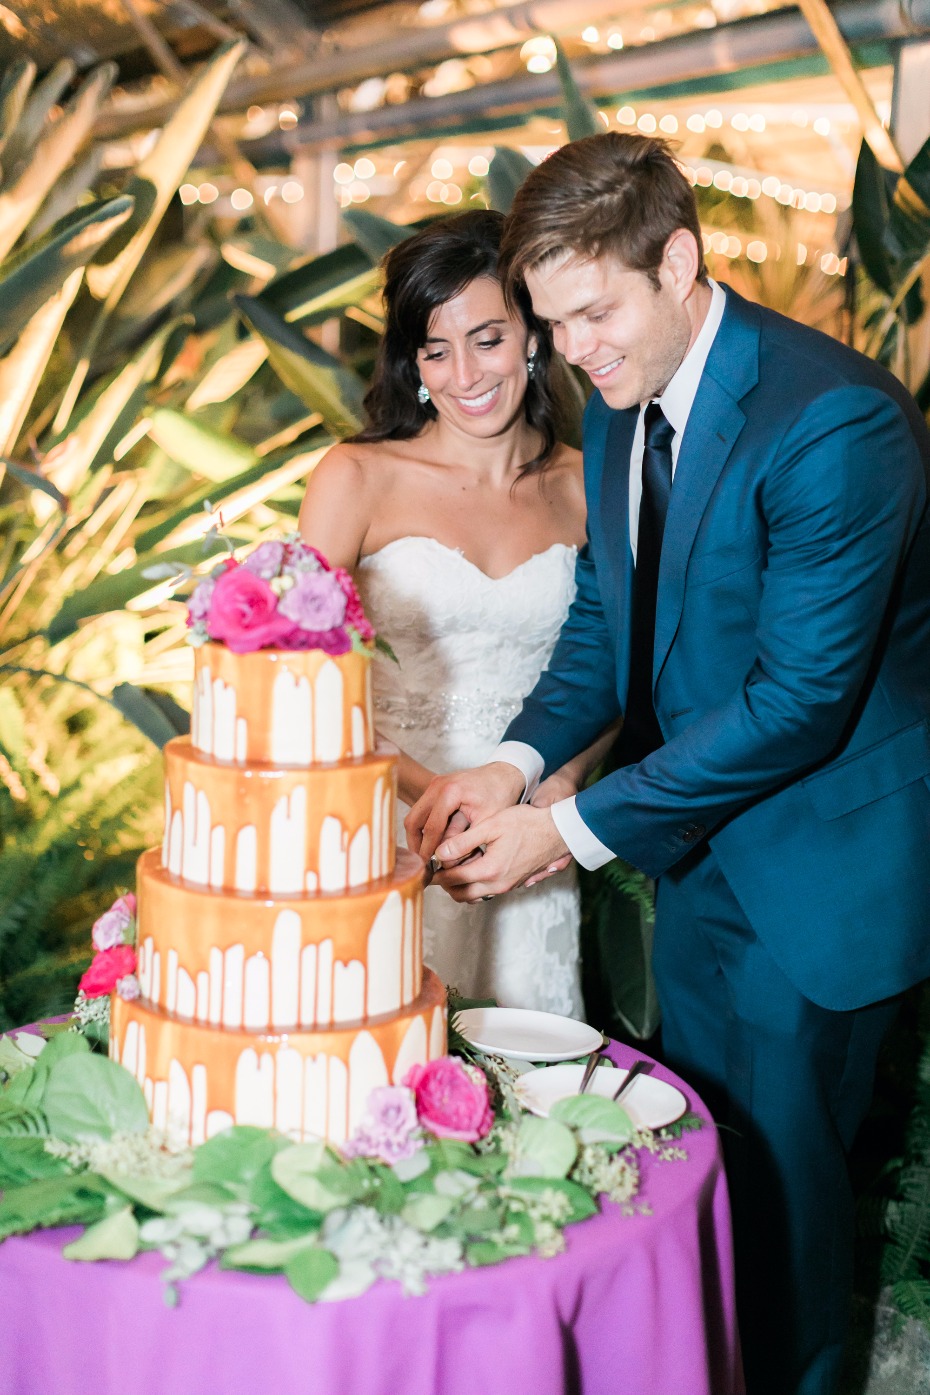 wedding couple cutting the wedding cake